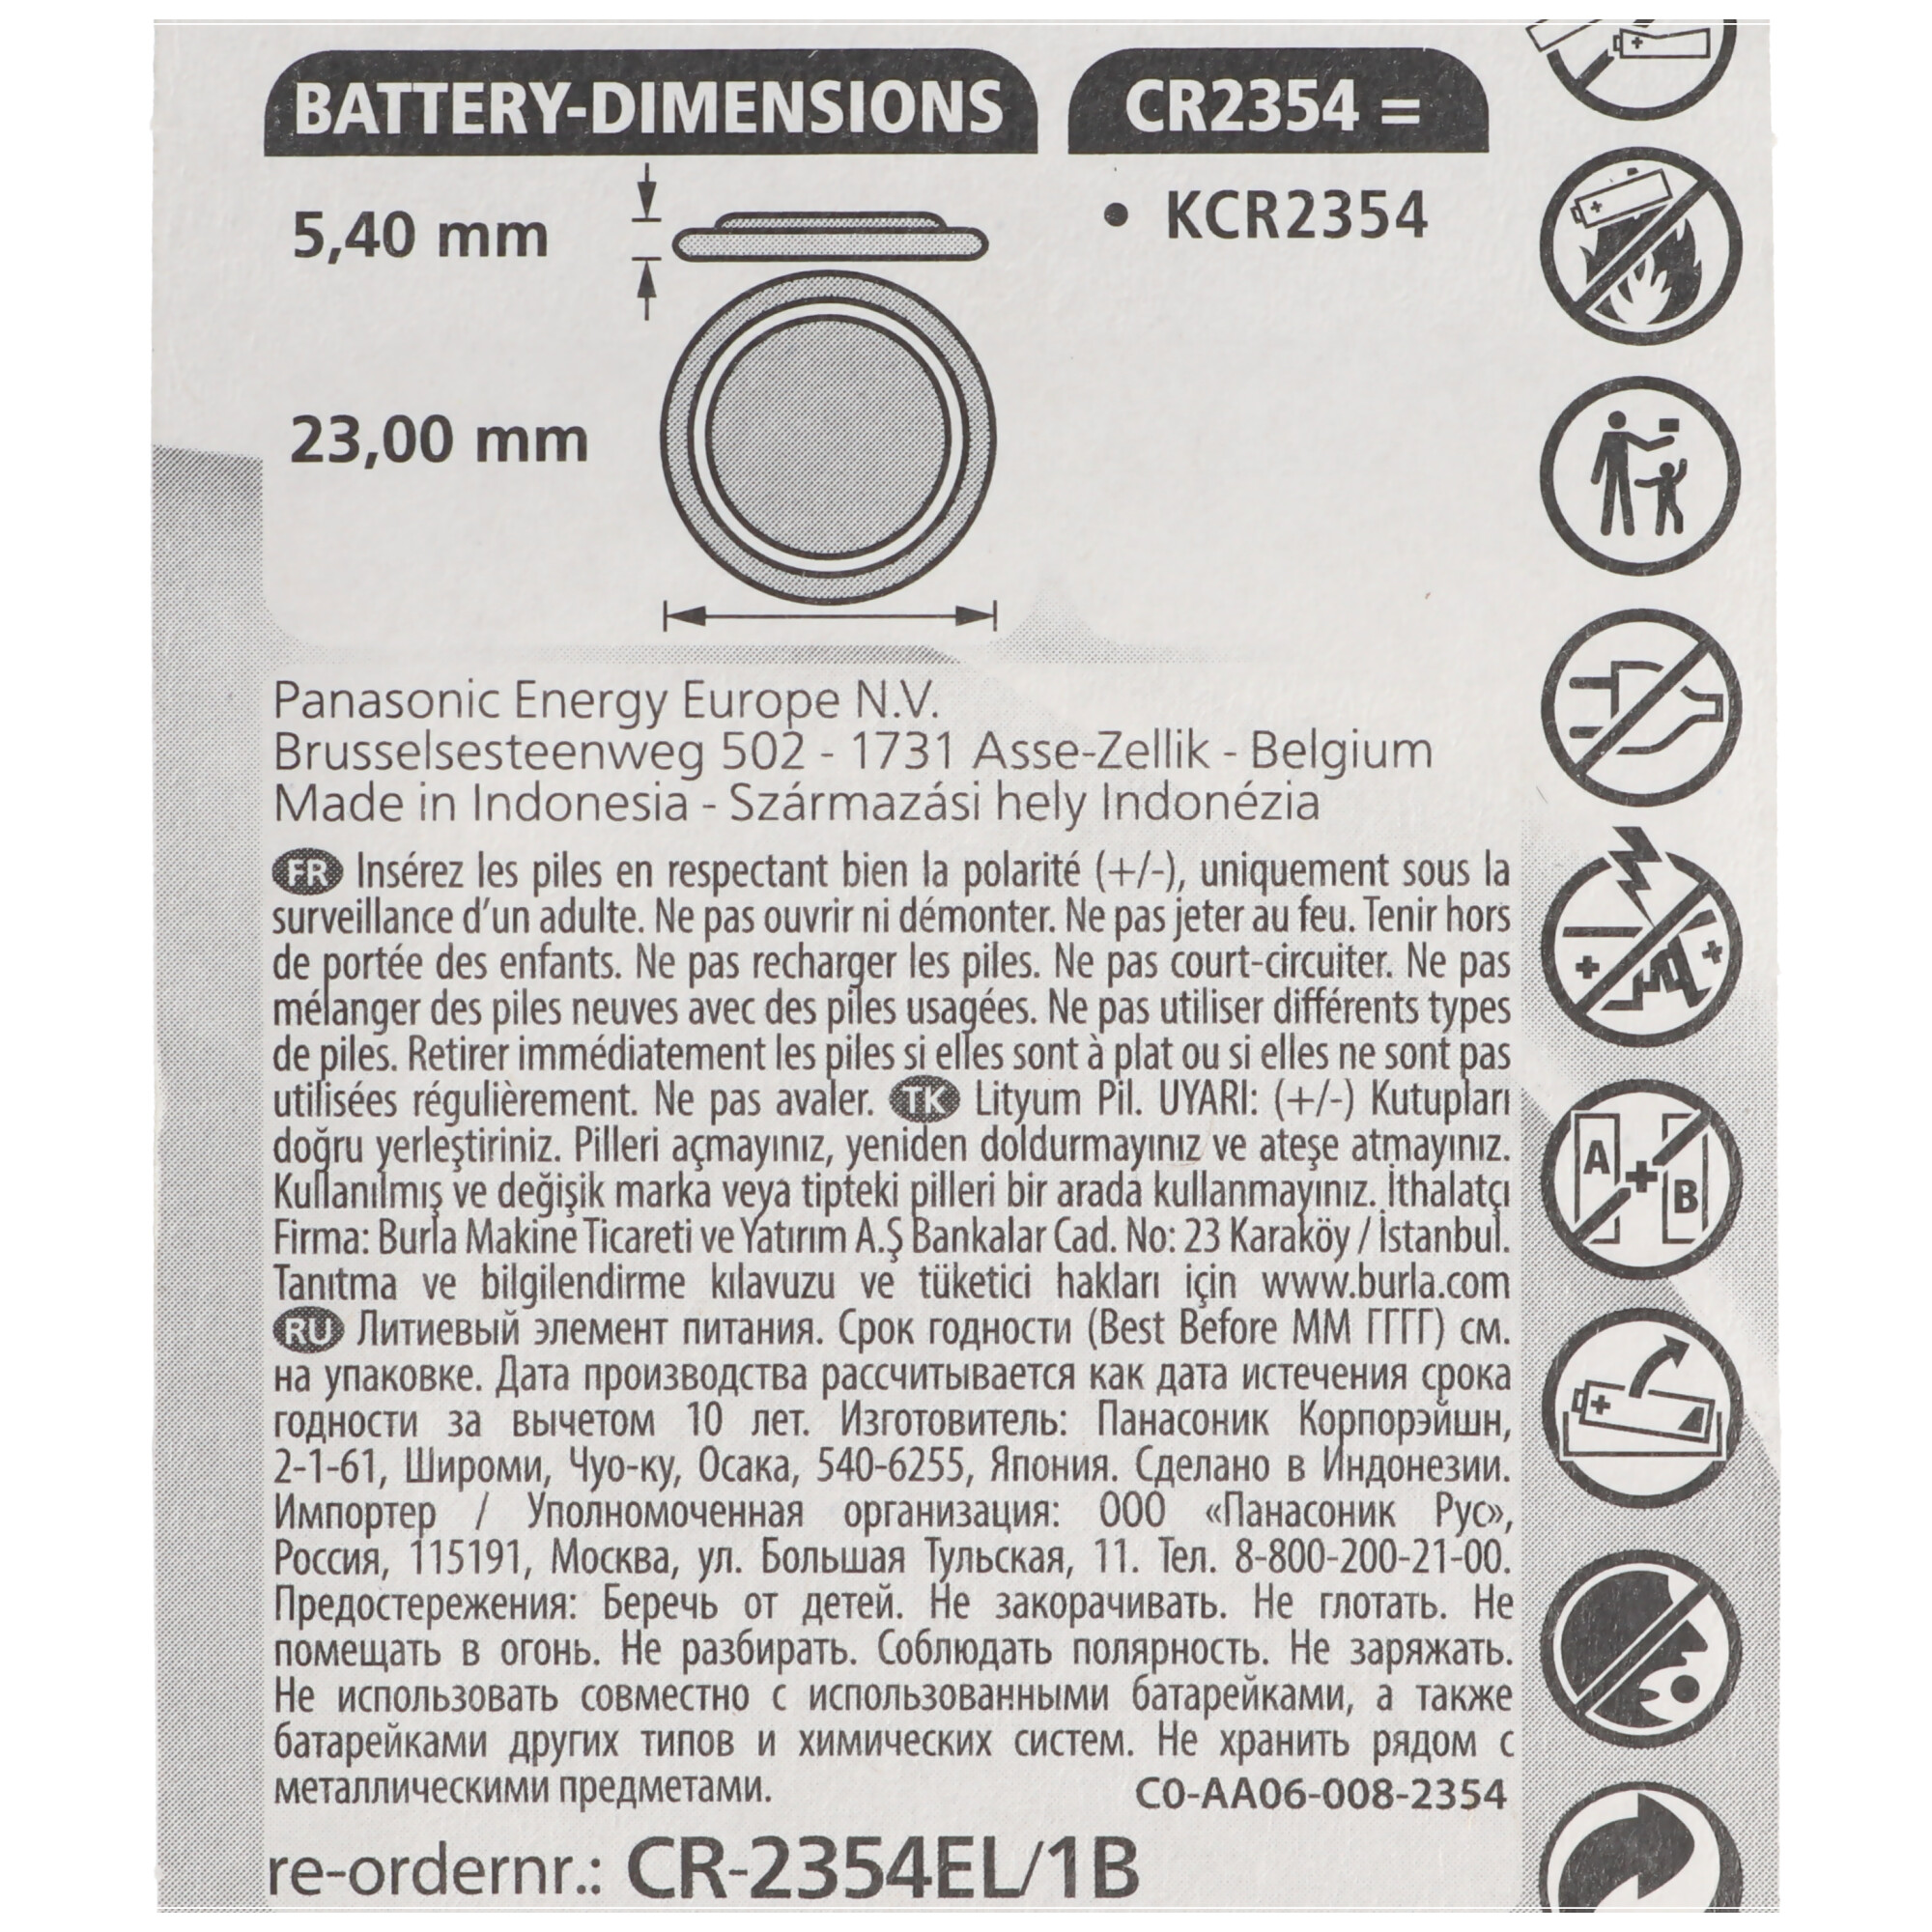 Panasonic CR2354 Lithium Batterie mit Vertiefung am Minuspol beachten